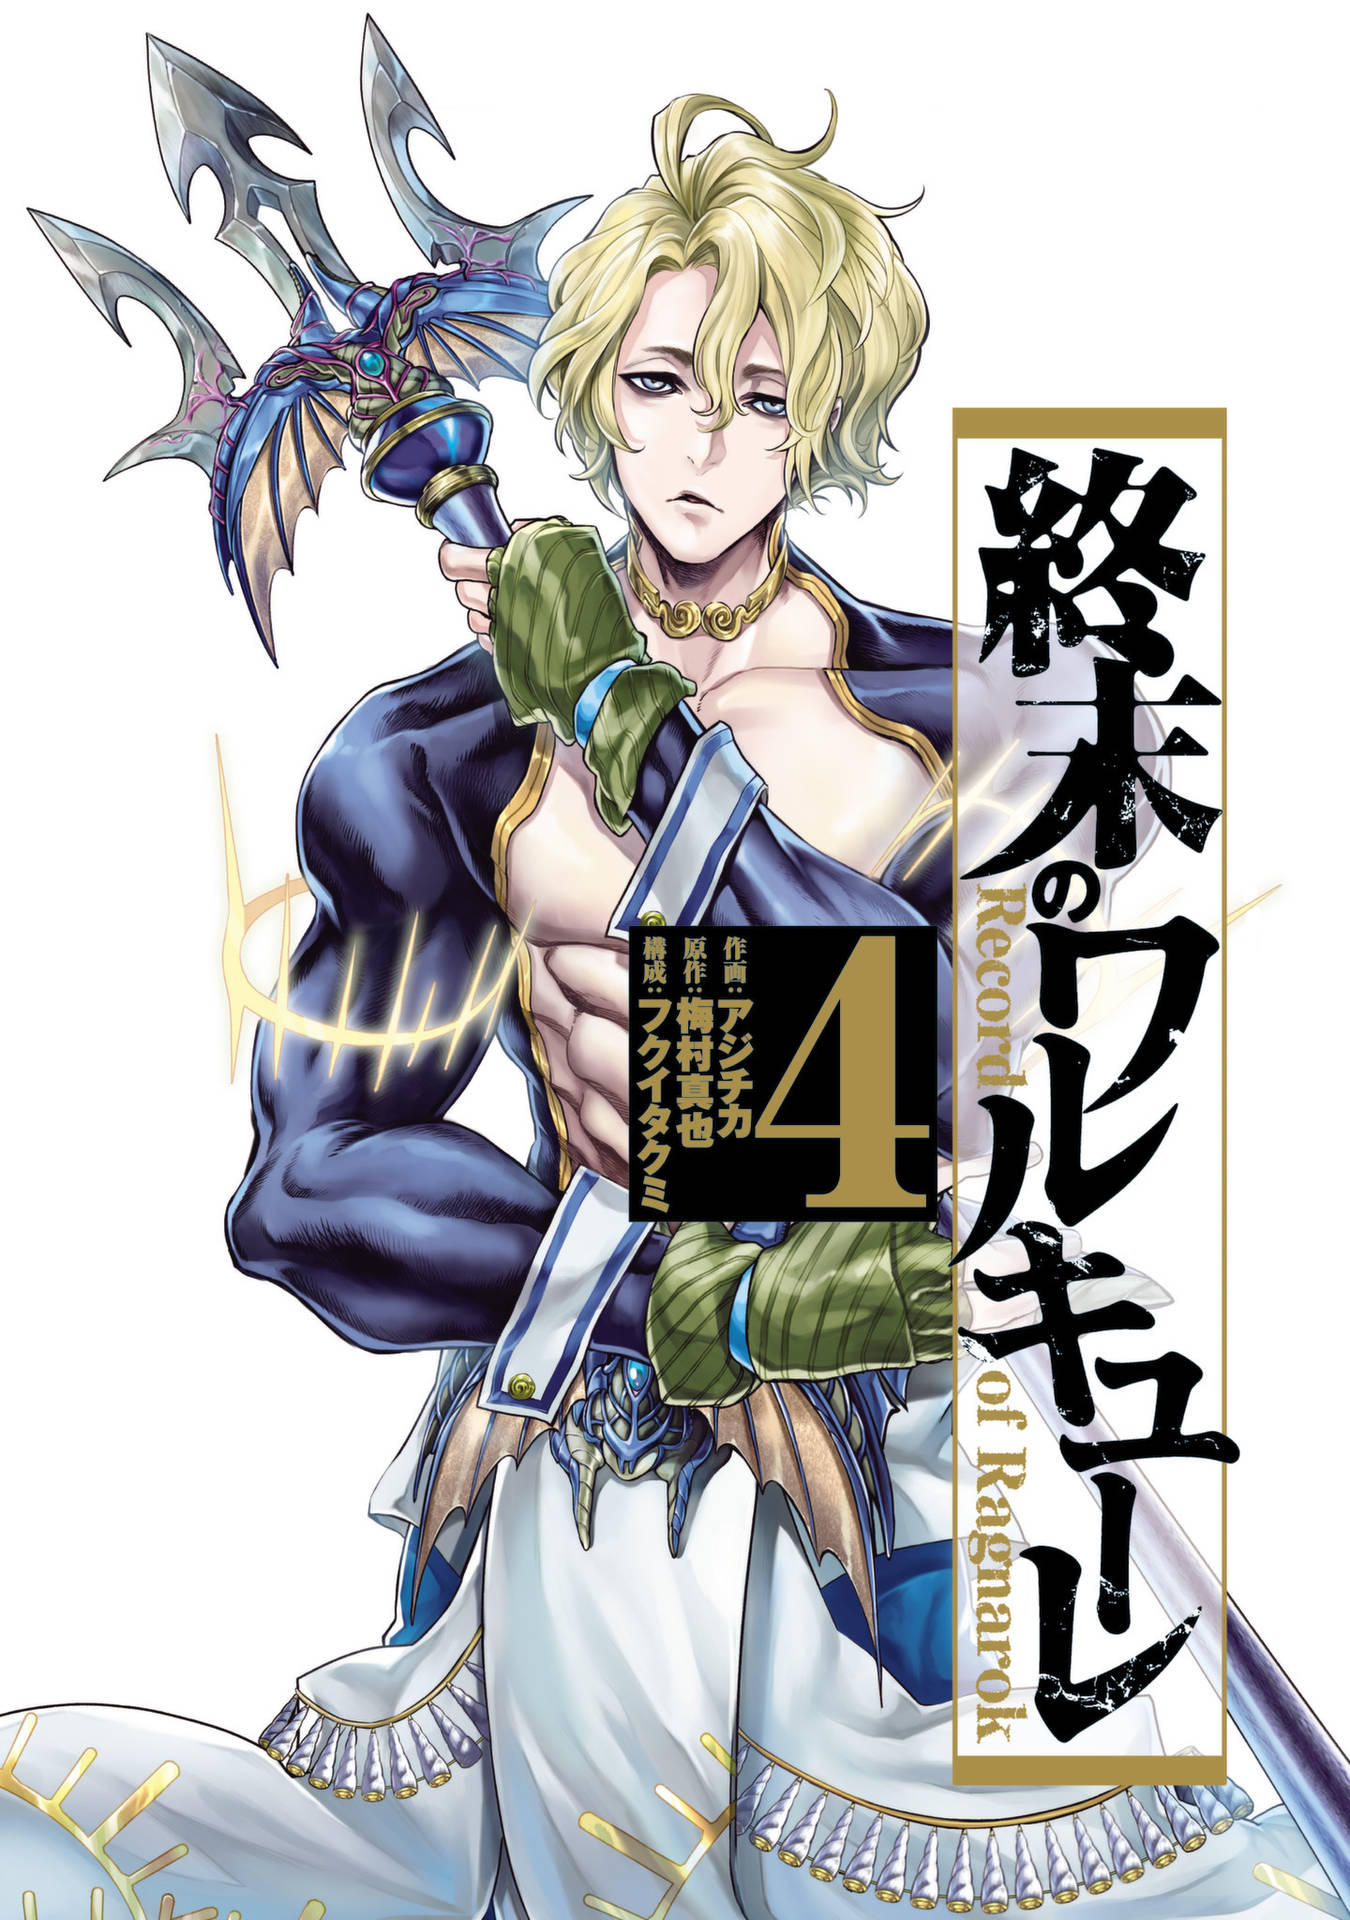 Record Of Ragnarok Poseidon Manga Cover